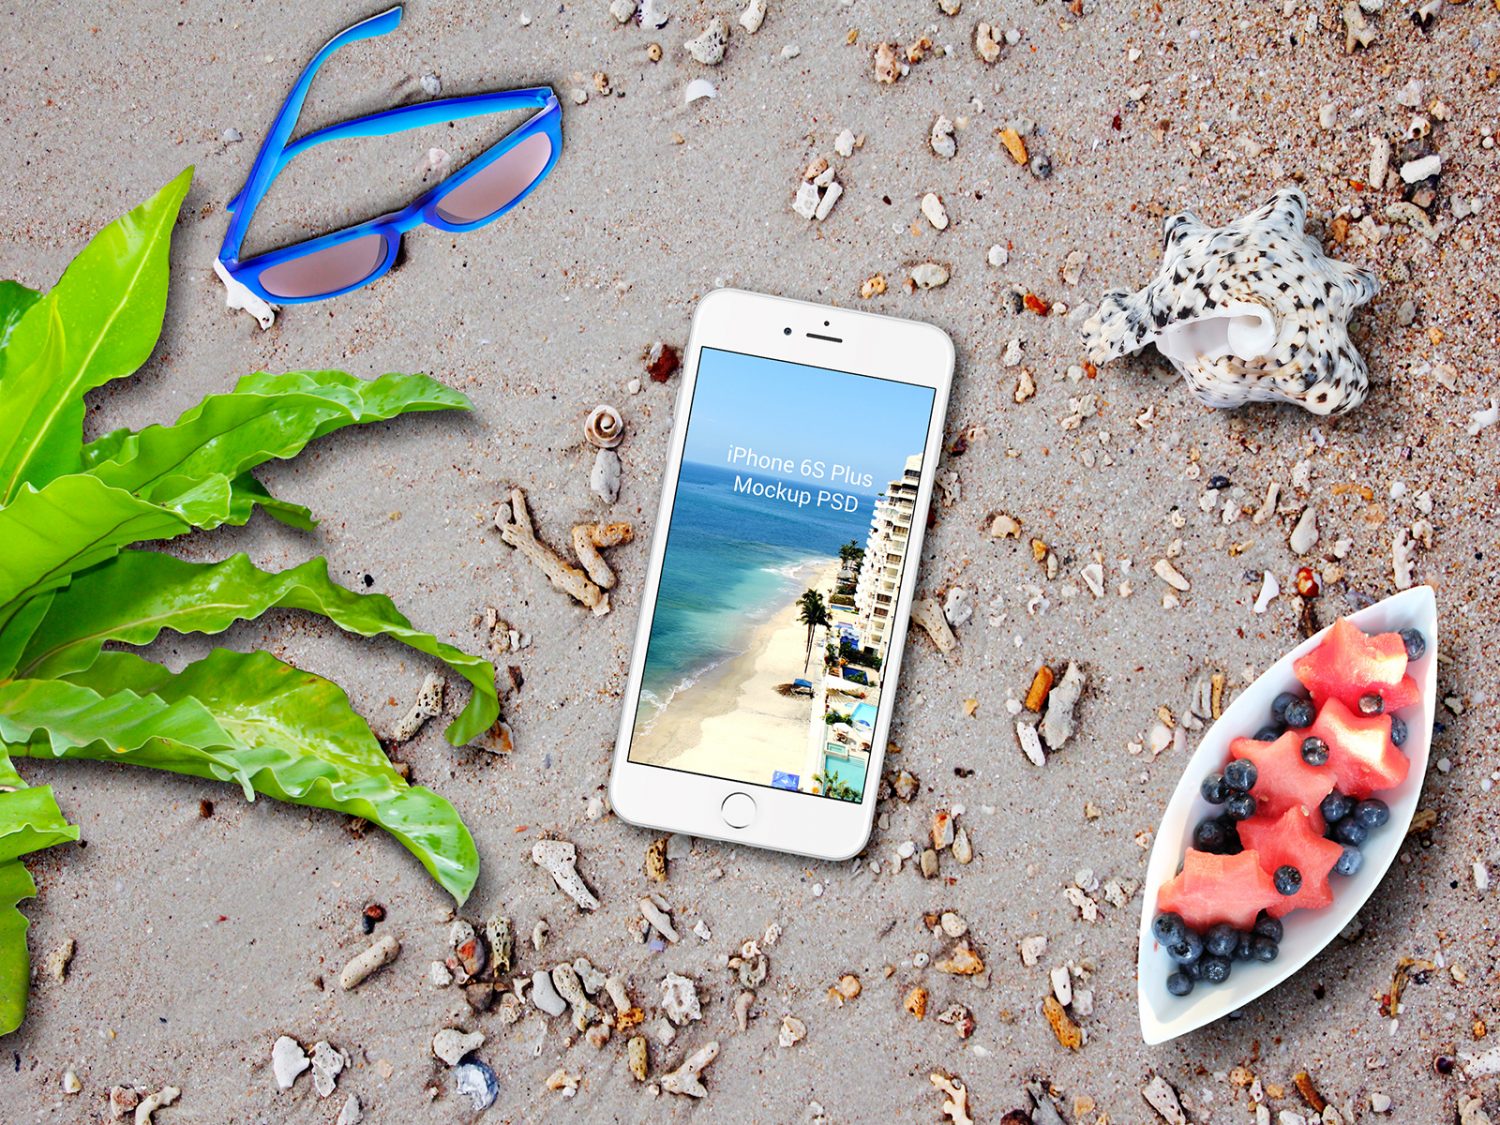 iPhone 6s Plus and iPad Pro on the Beach Mockup